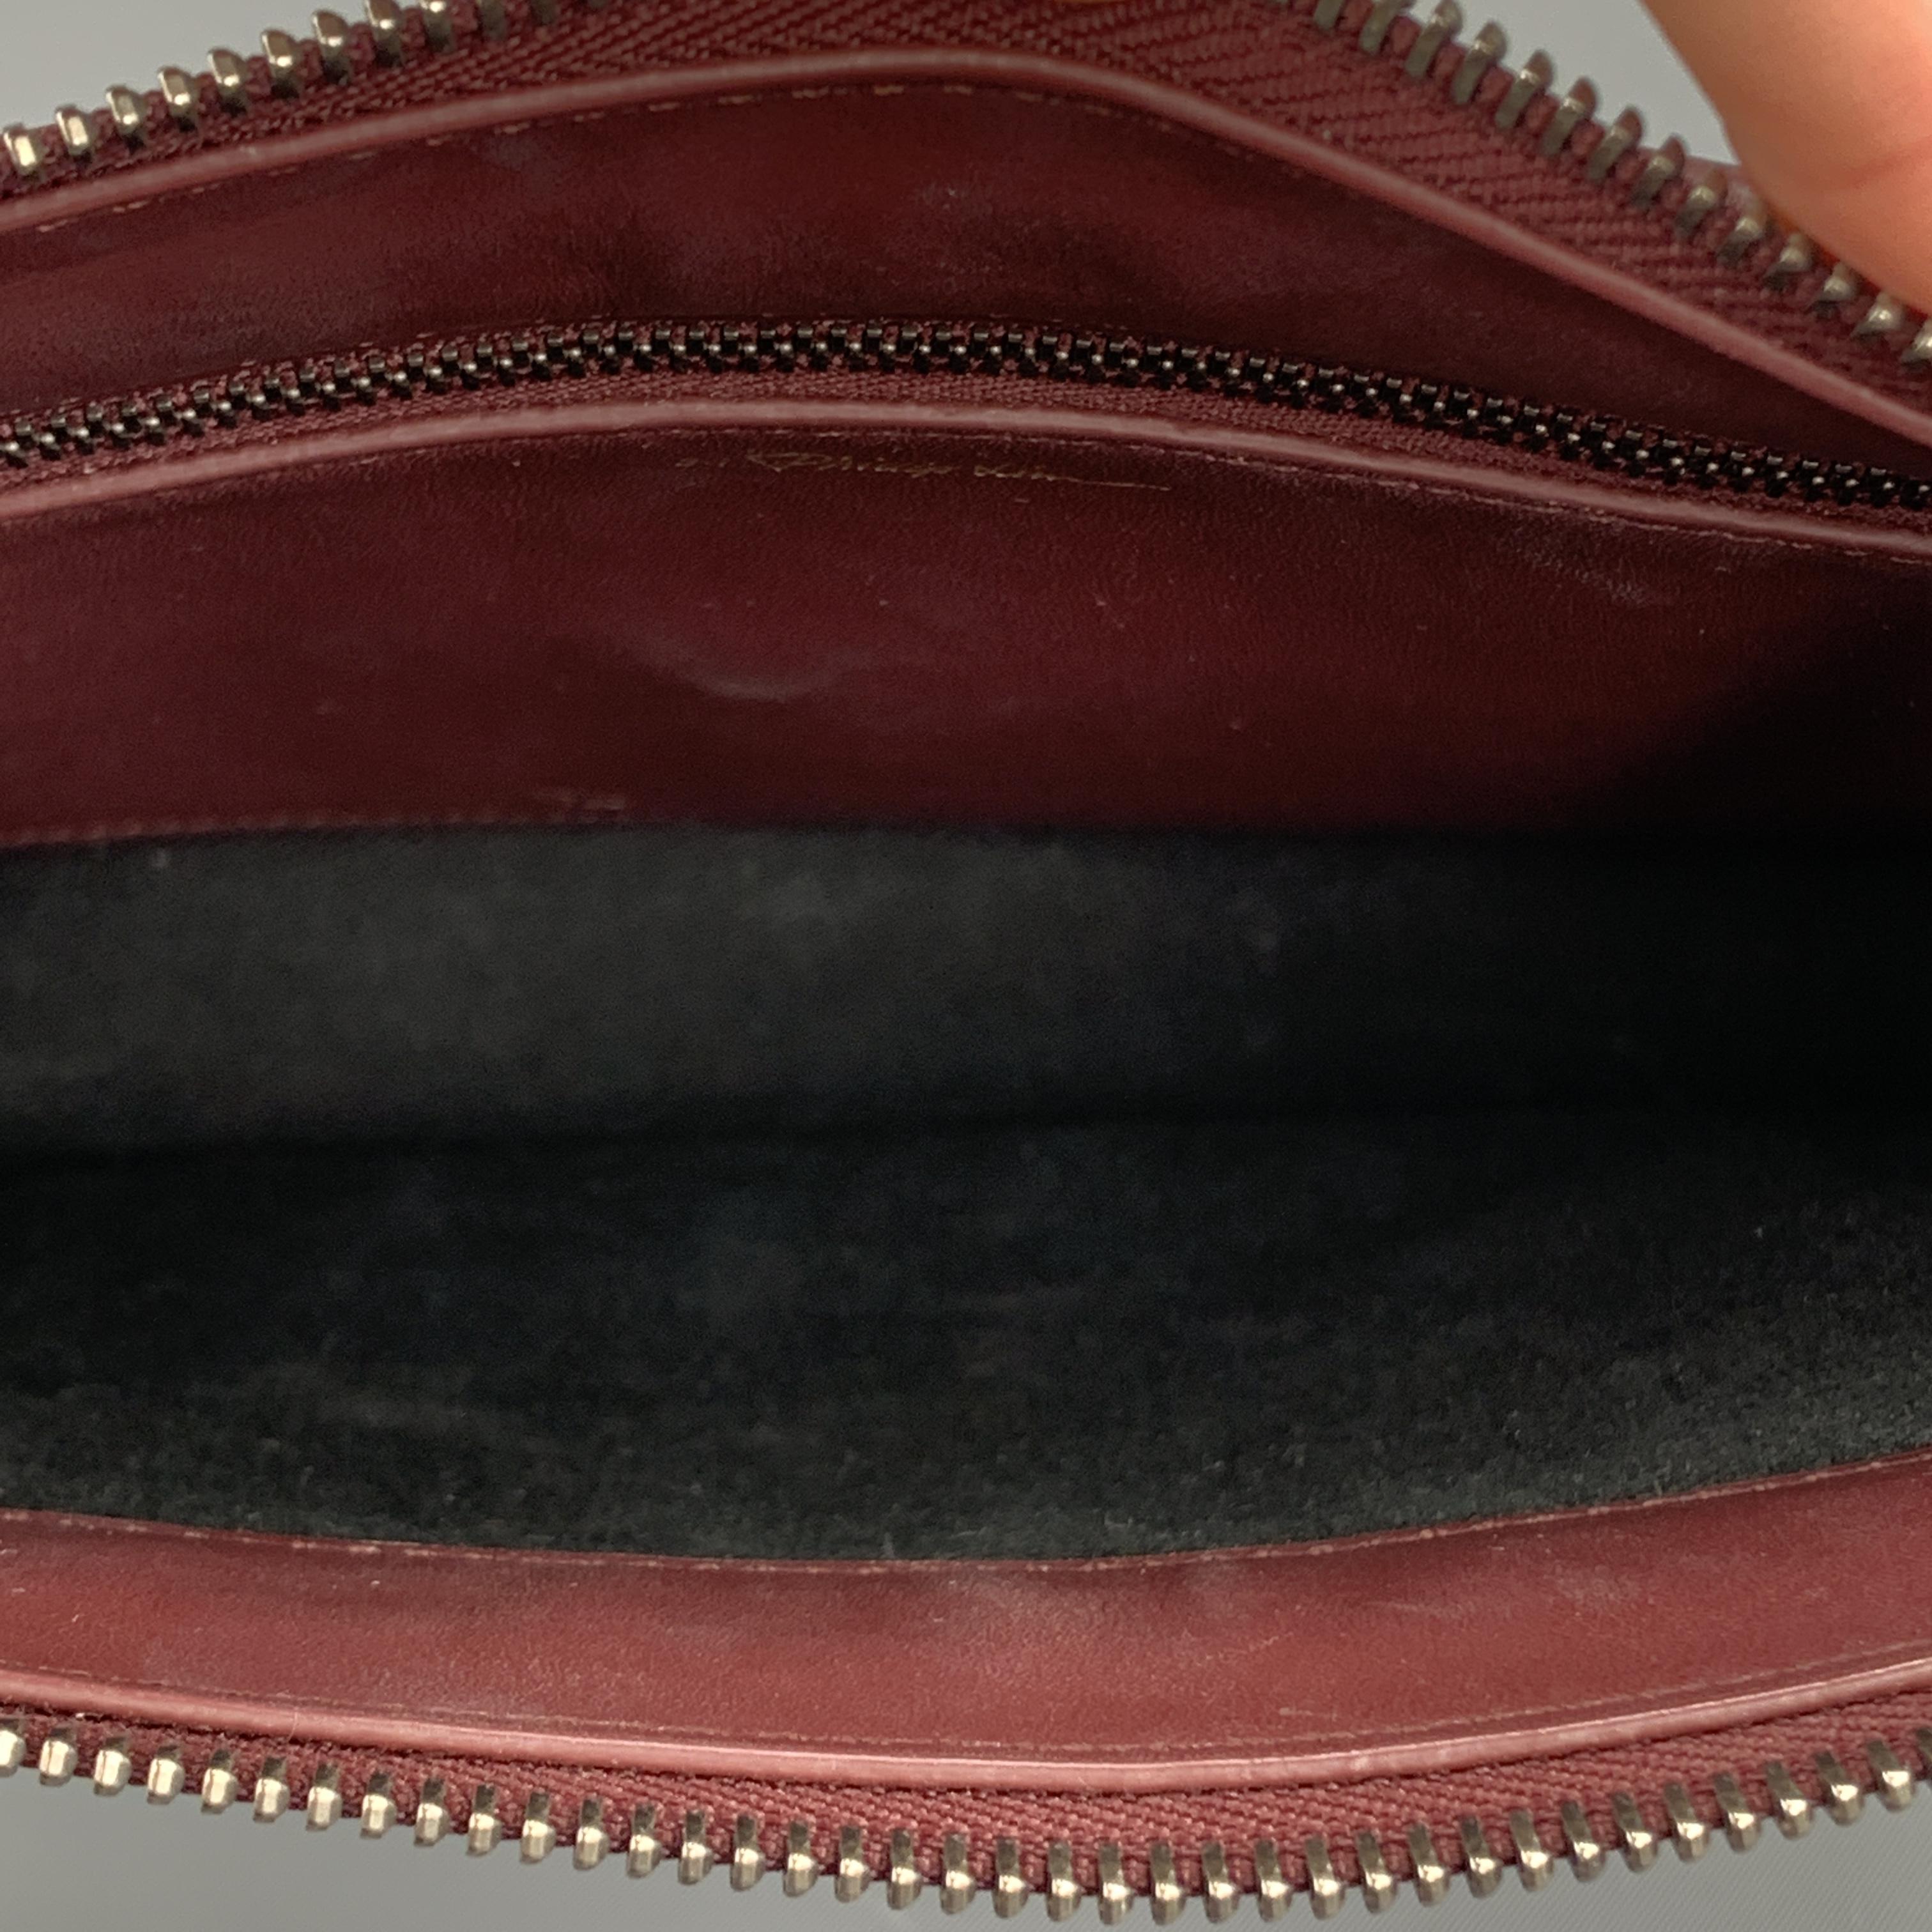 3.1 PHILLIP LIM Burgundy Leather CASH ONLY Clutch Handbag 6